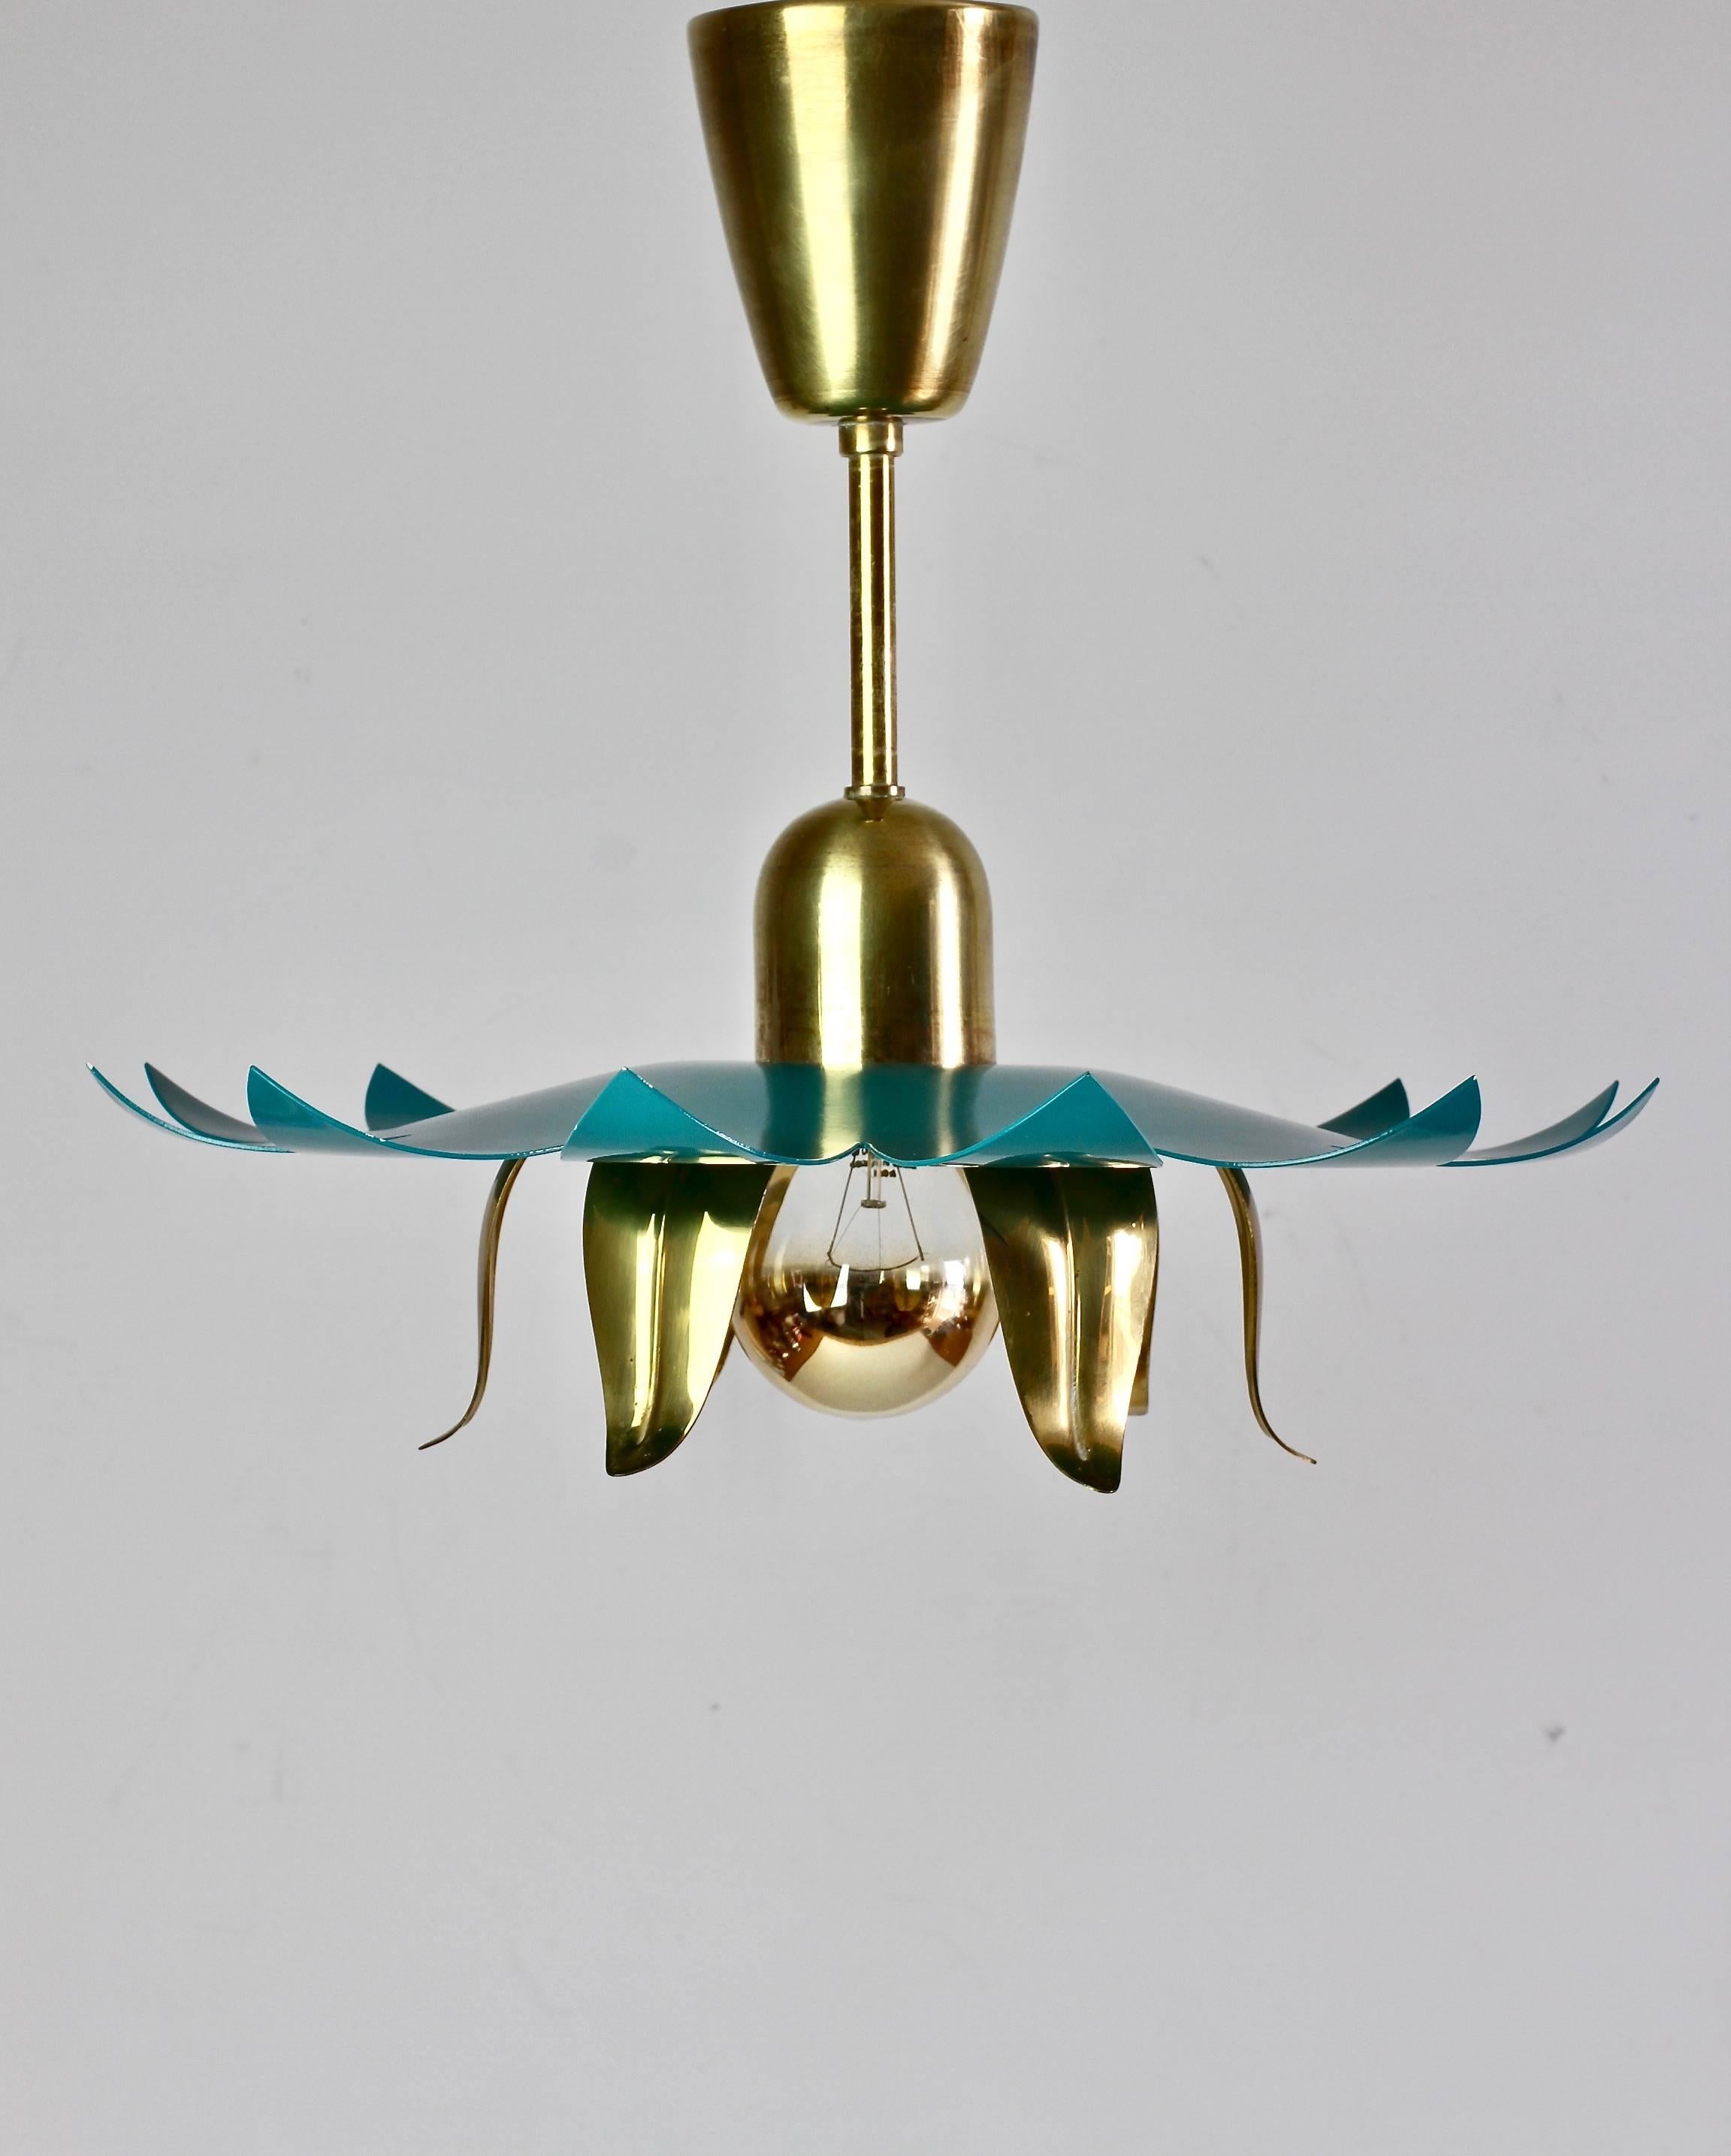 1950s Italian Stilnovo Style Brass and Turquoise Flower Pendant Light Fixture 1